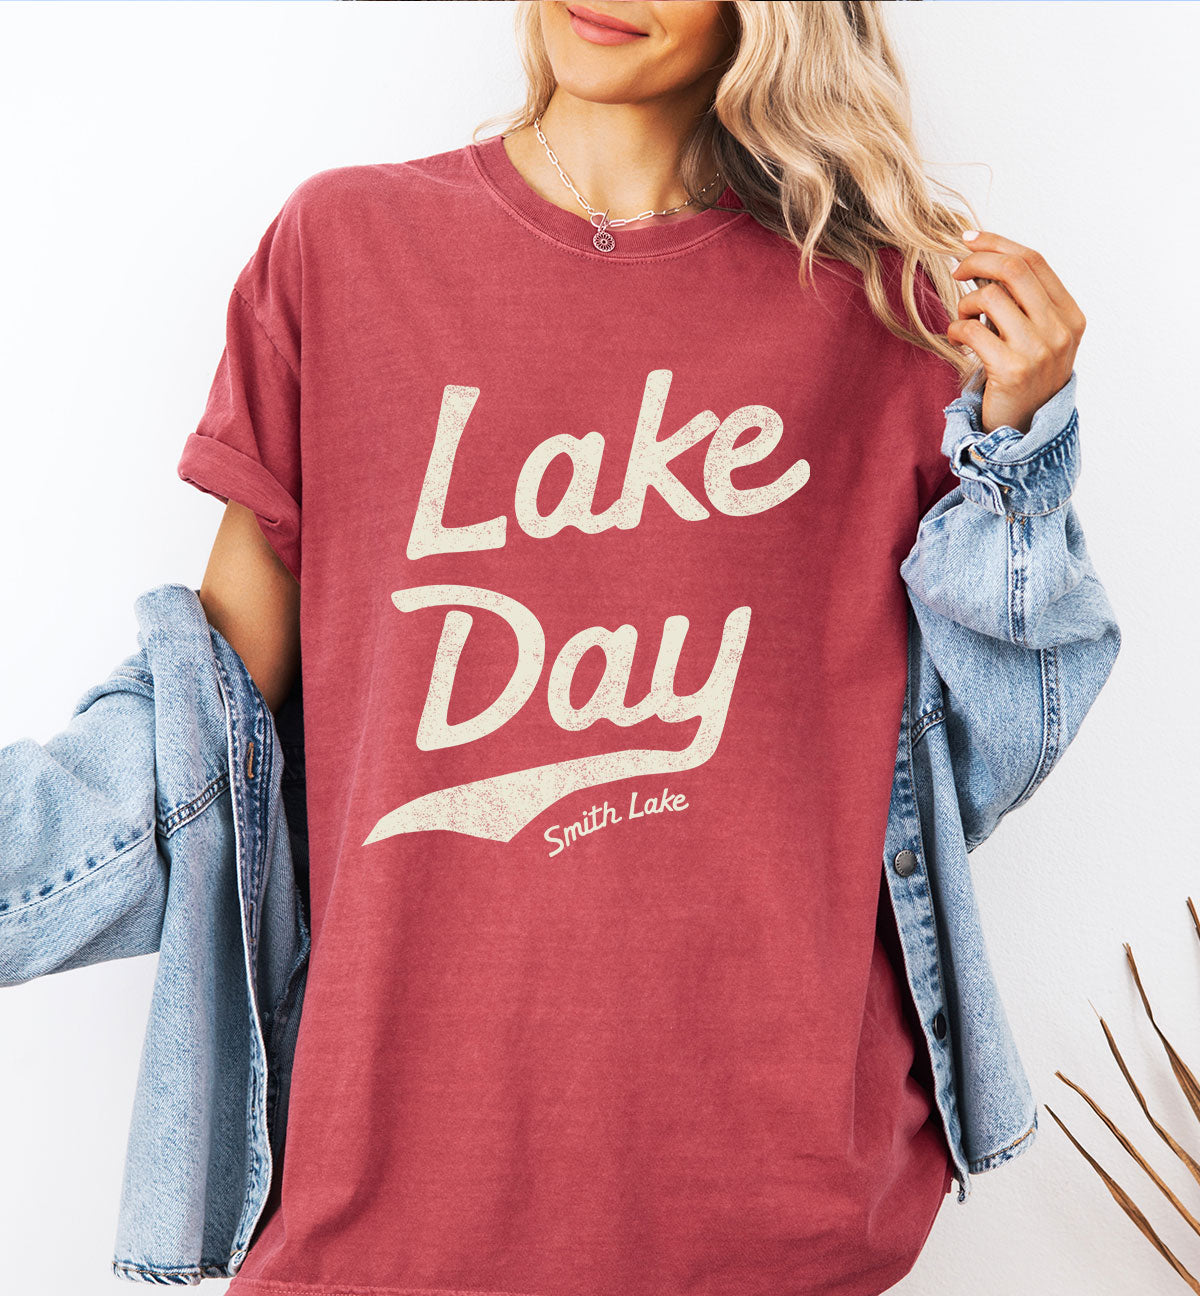 Lake Day - Smith Lake Tshirt